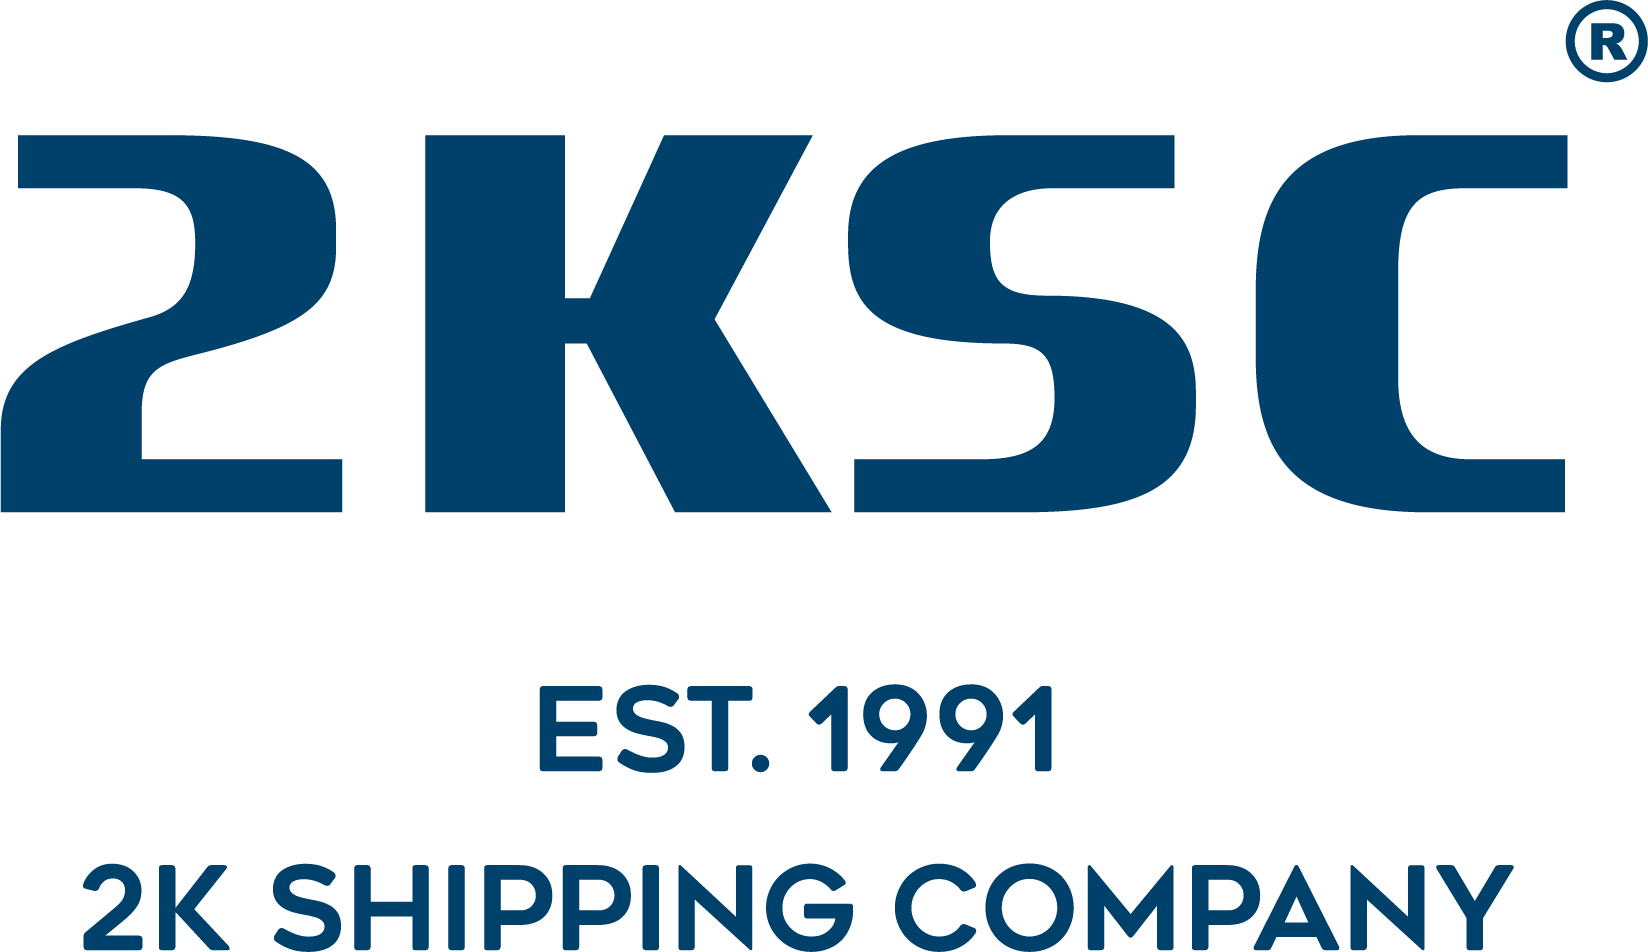 2K Shipping Company JSC